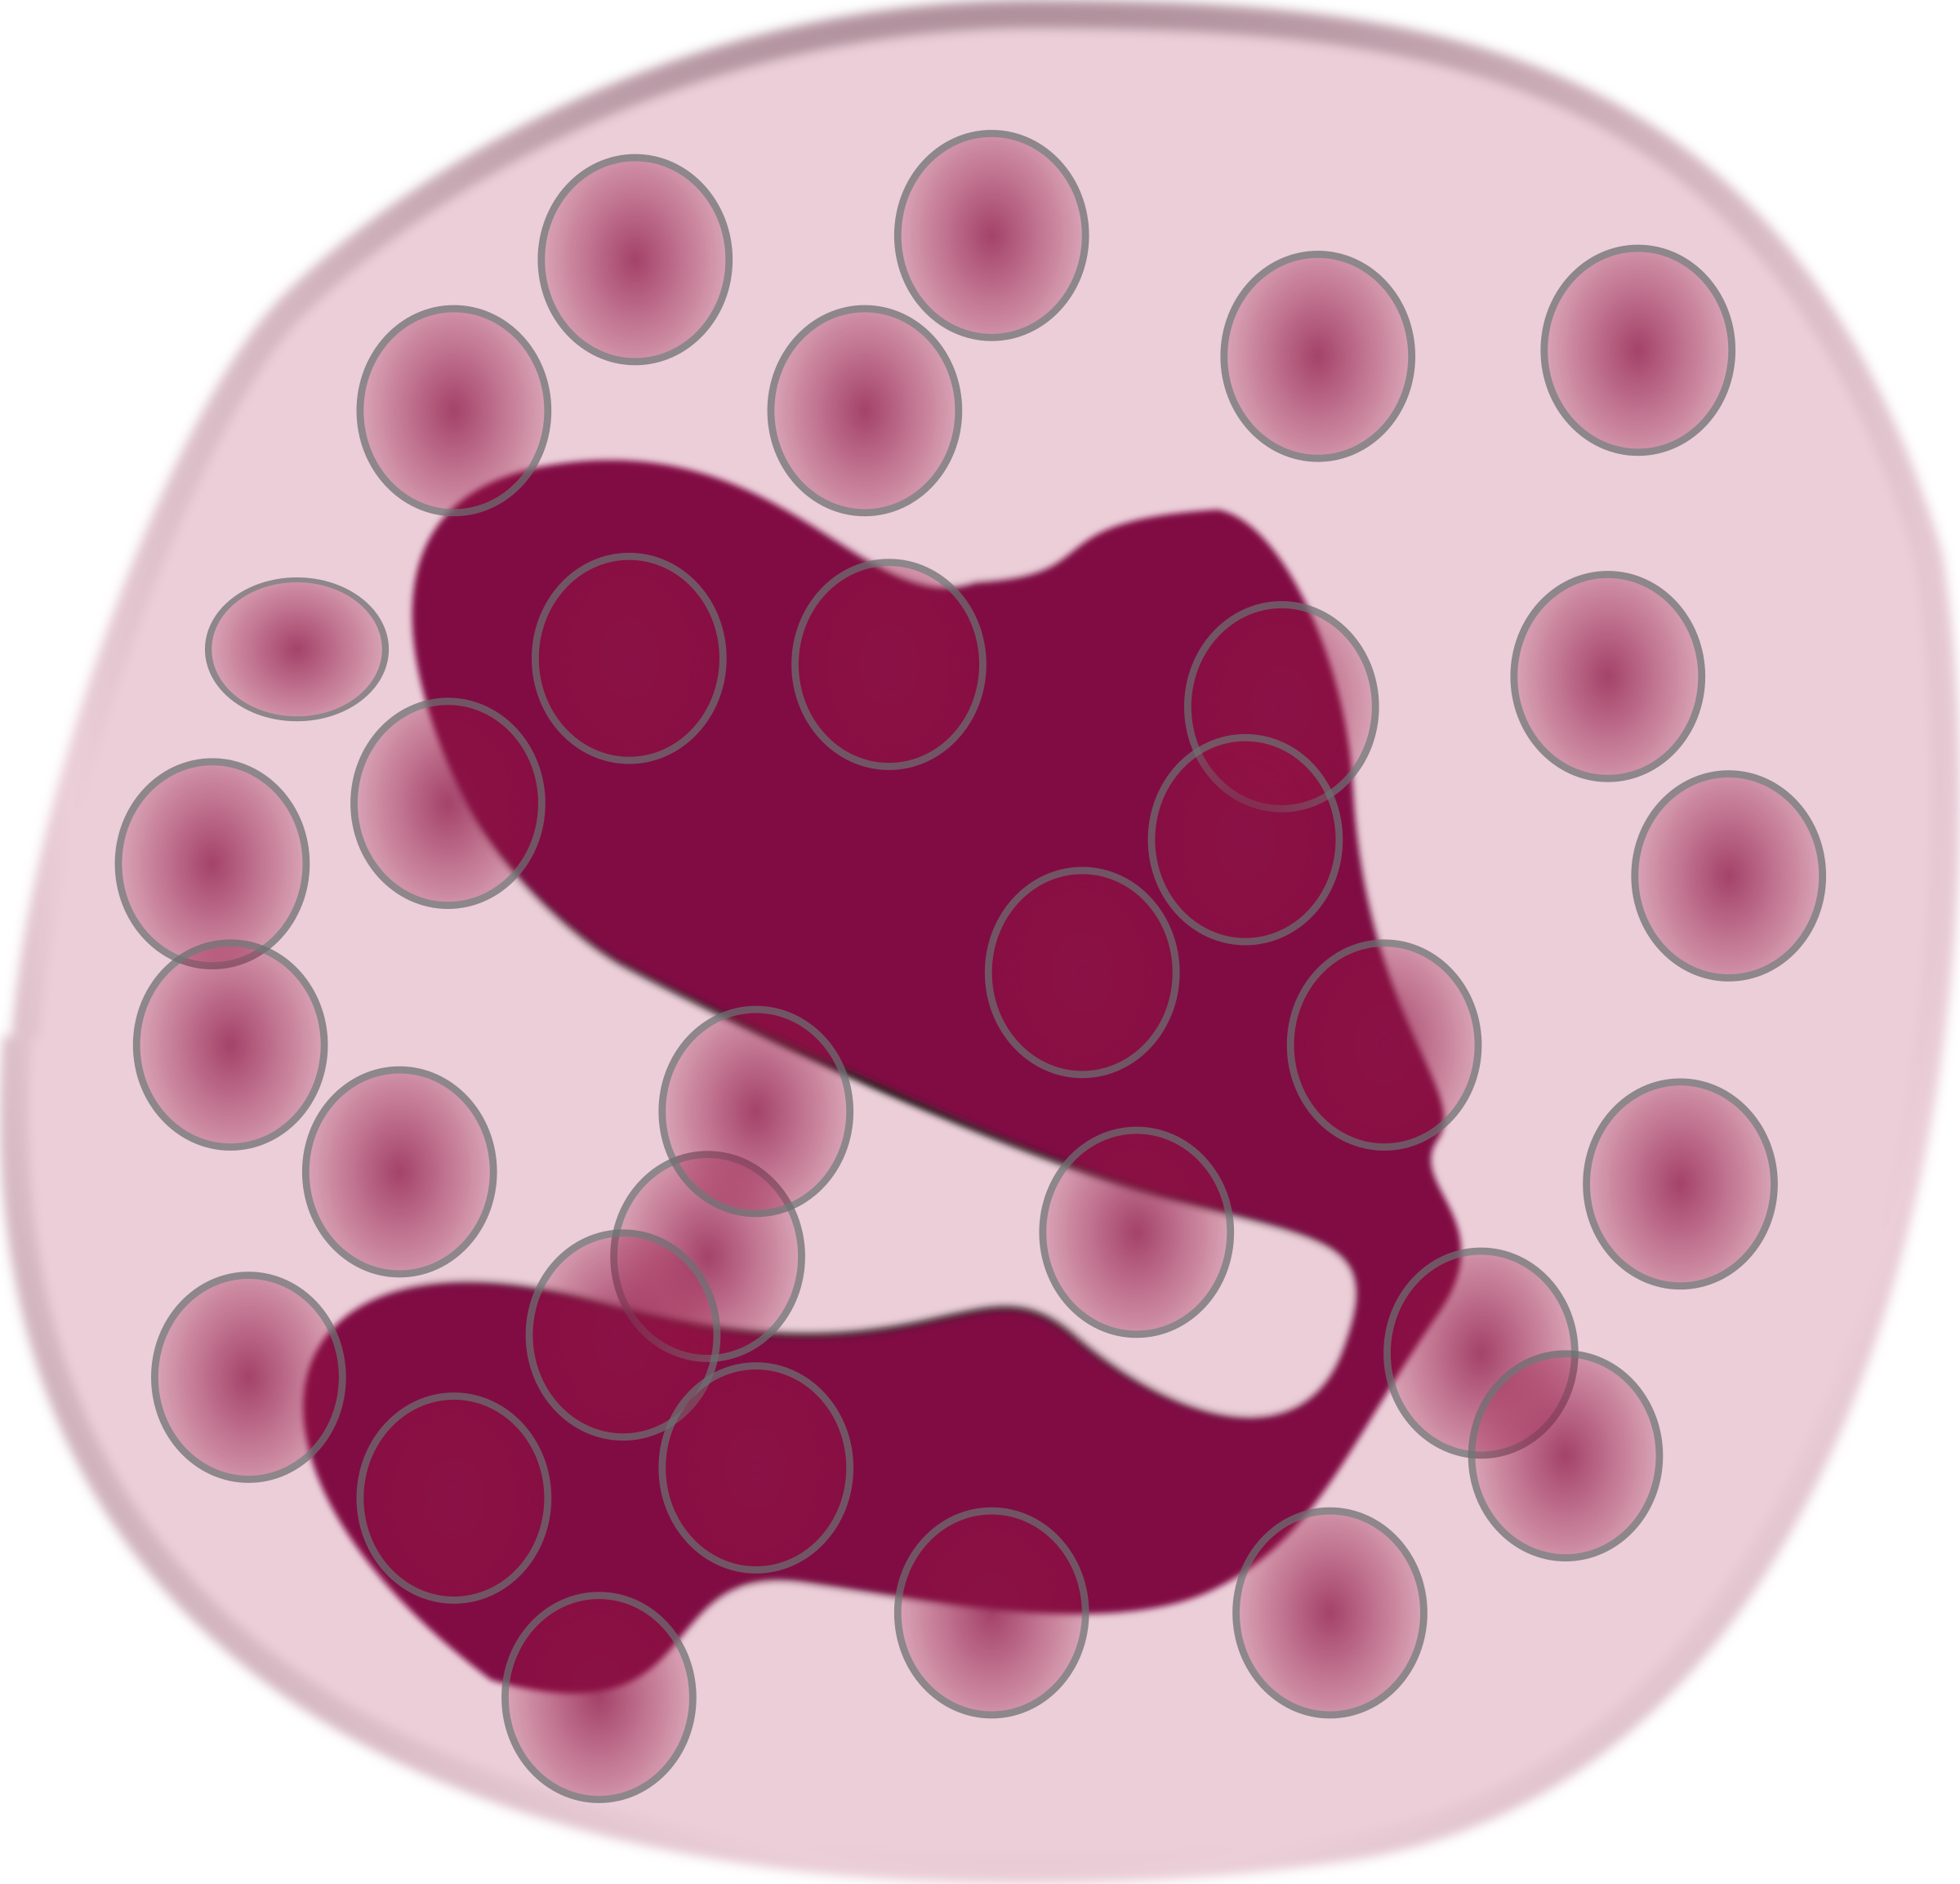 Eosinophils White Blood Cells (2400x2307)